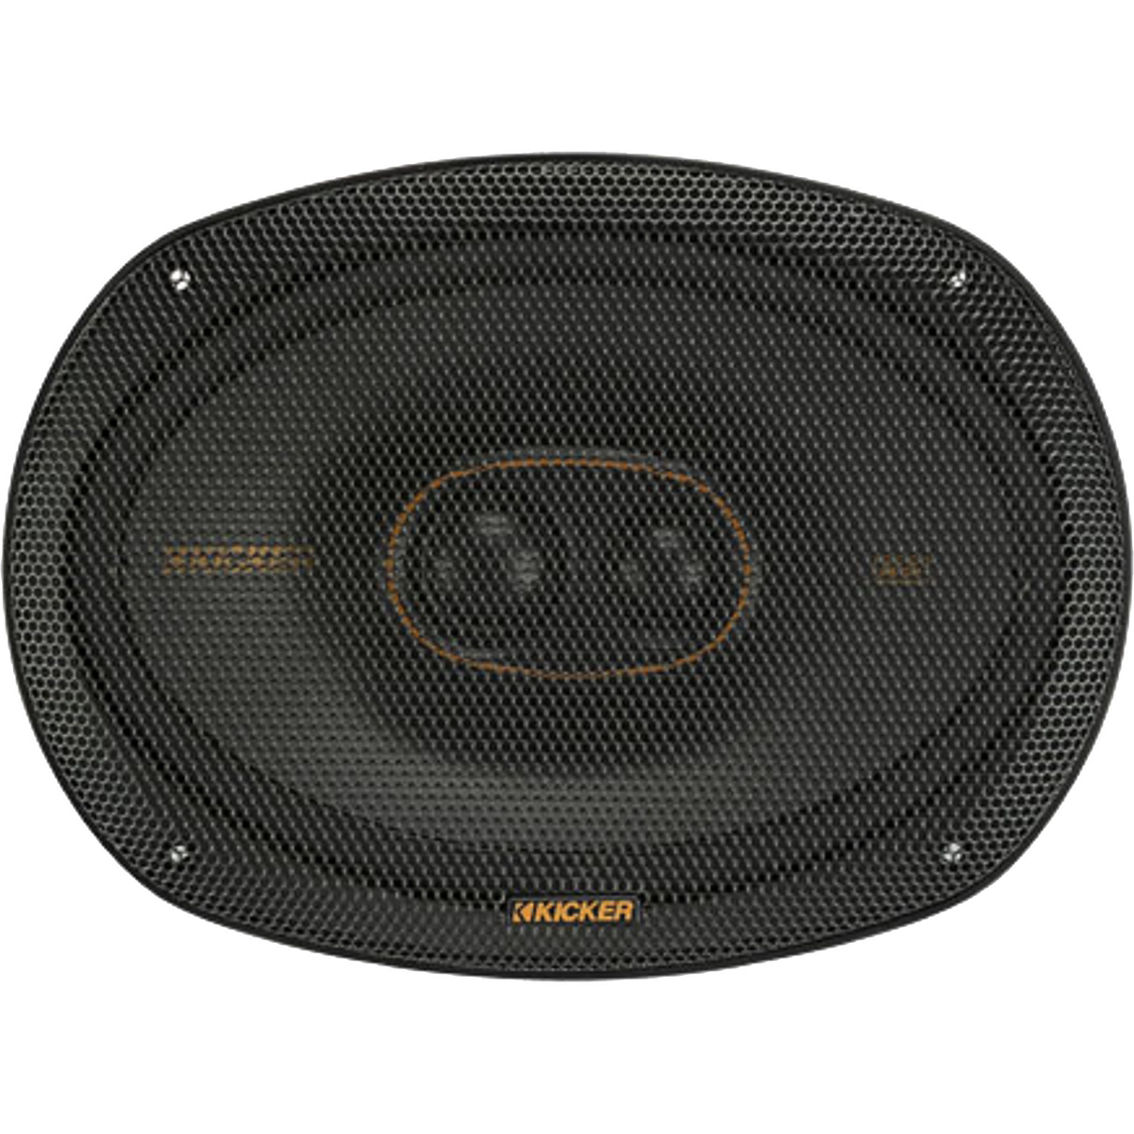 Kicker 51KSC69304 6x9 in. Triaxial Speakers - Image 2 of 3